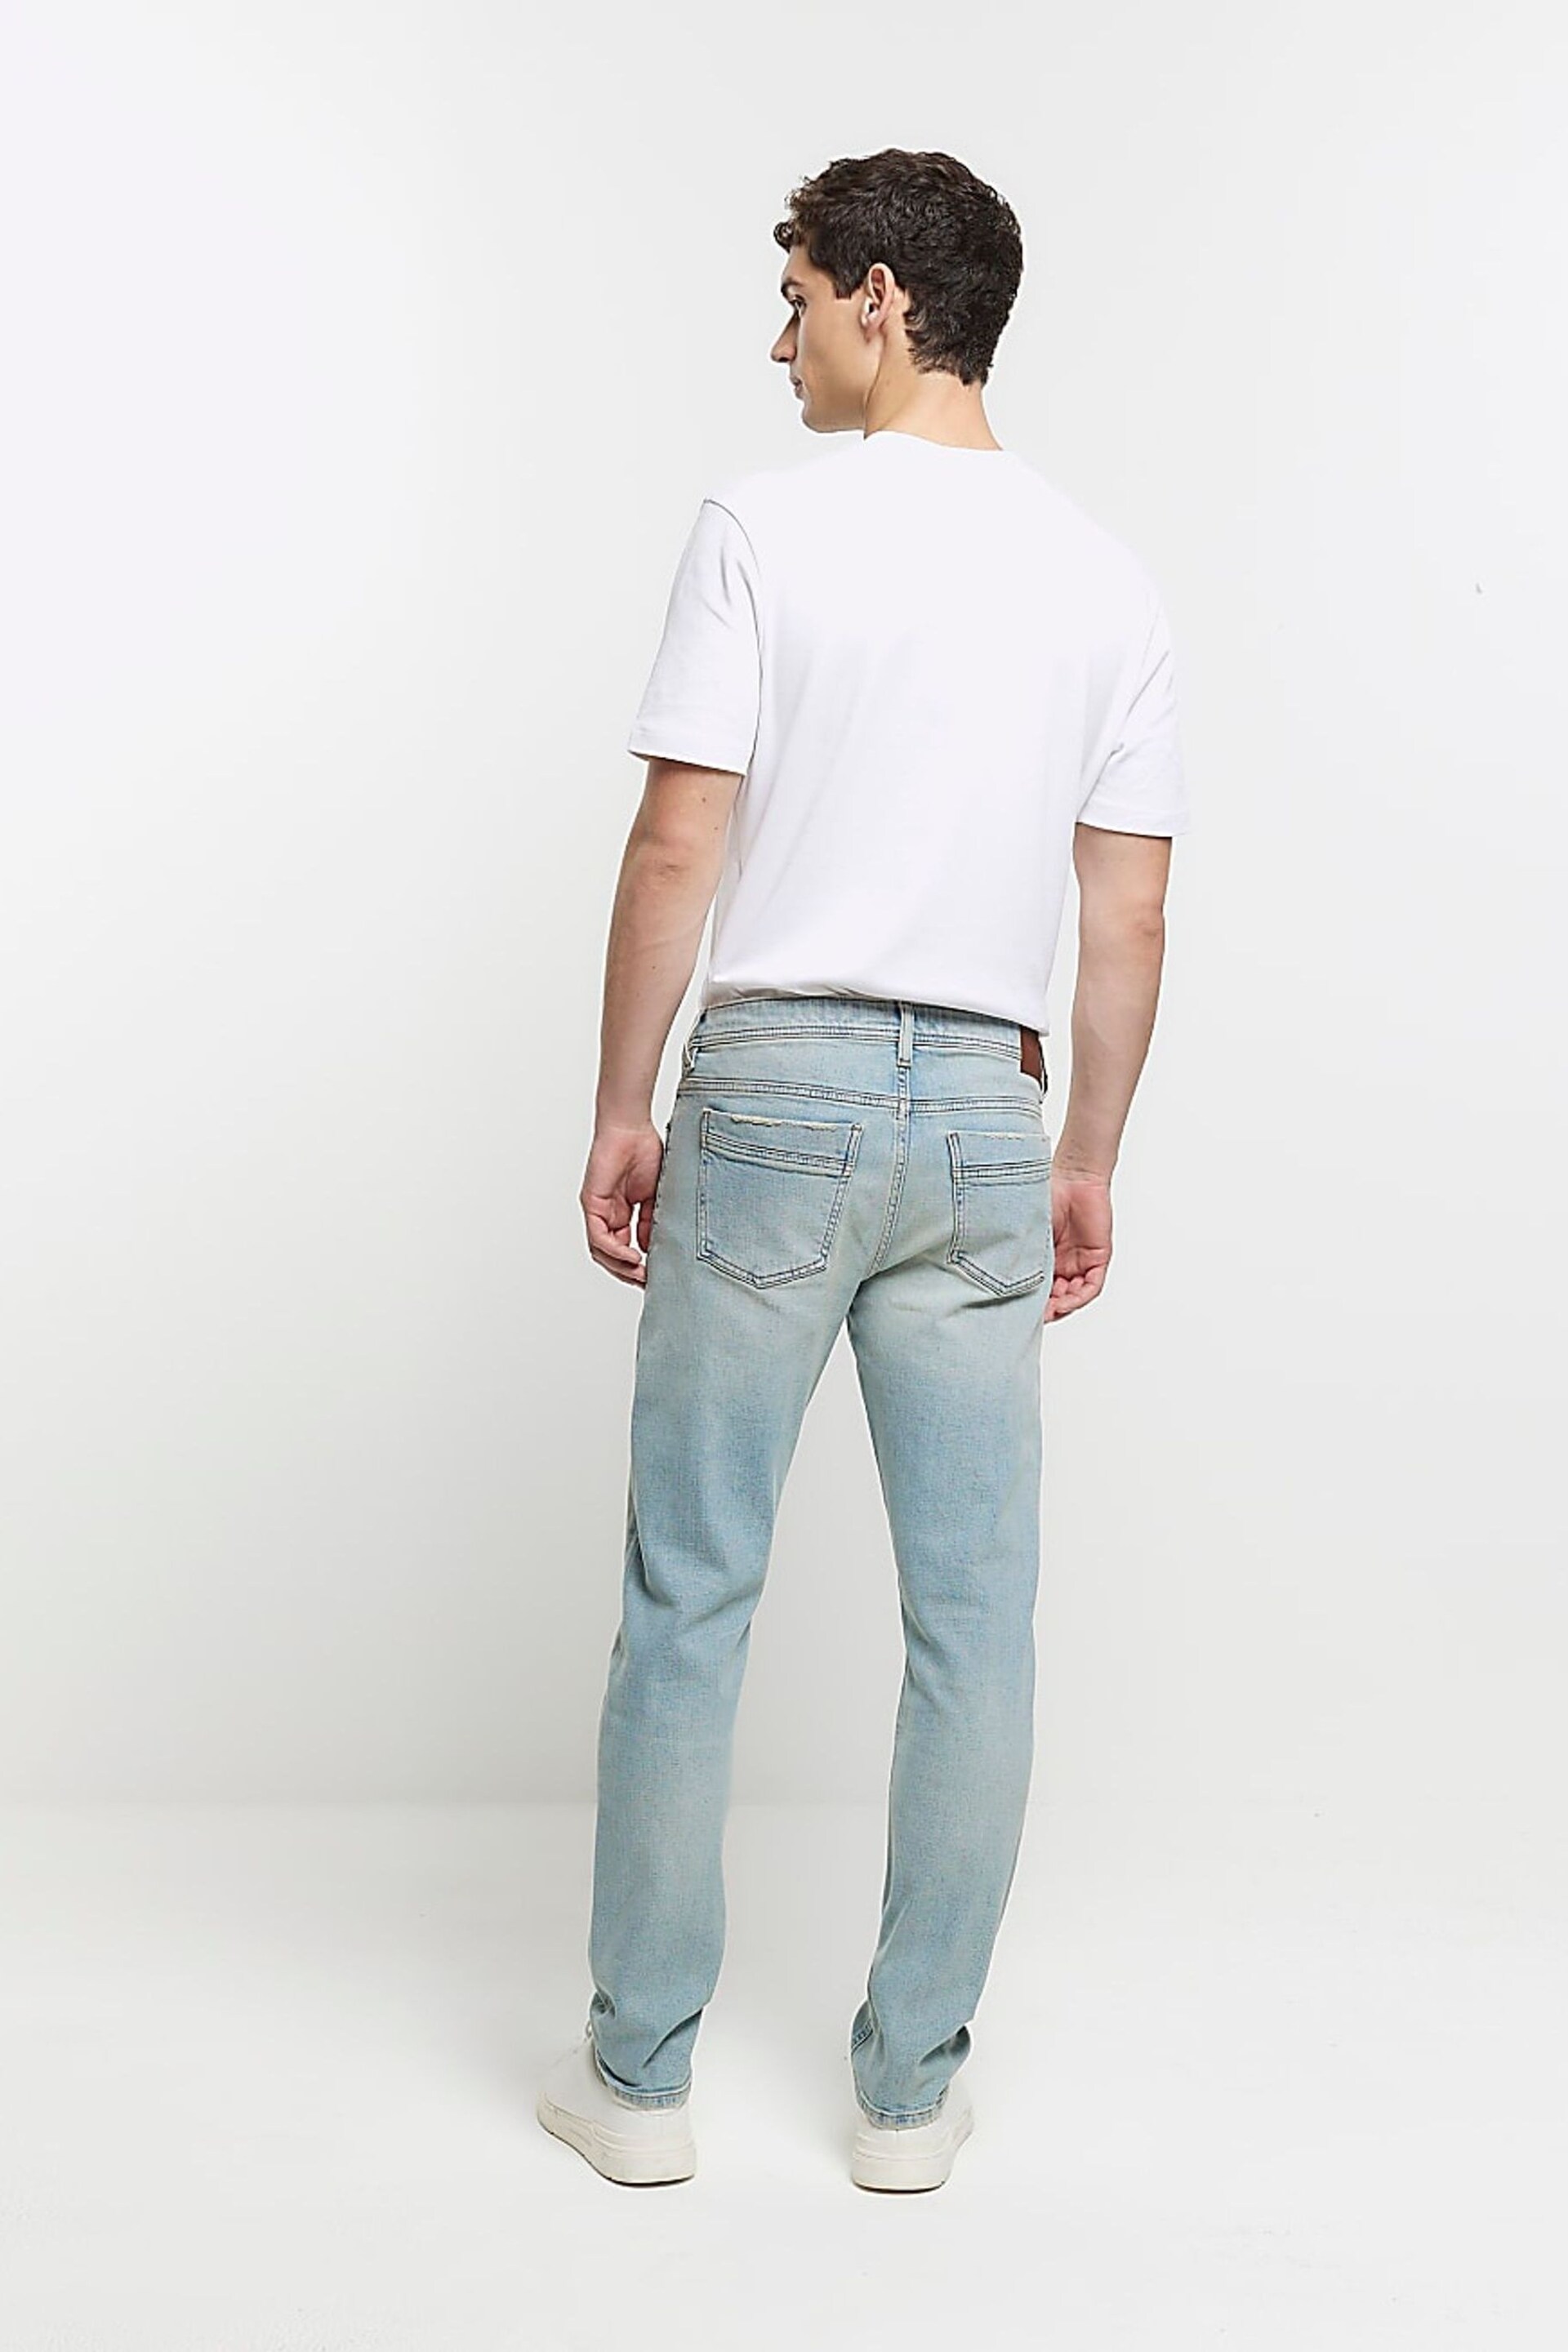 River Island Light blue Slim Fit Jeans - Image 2 of 6